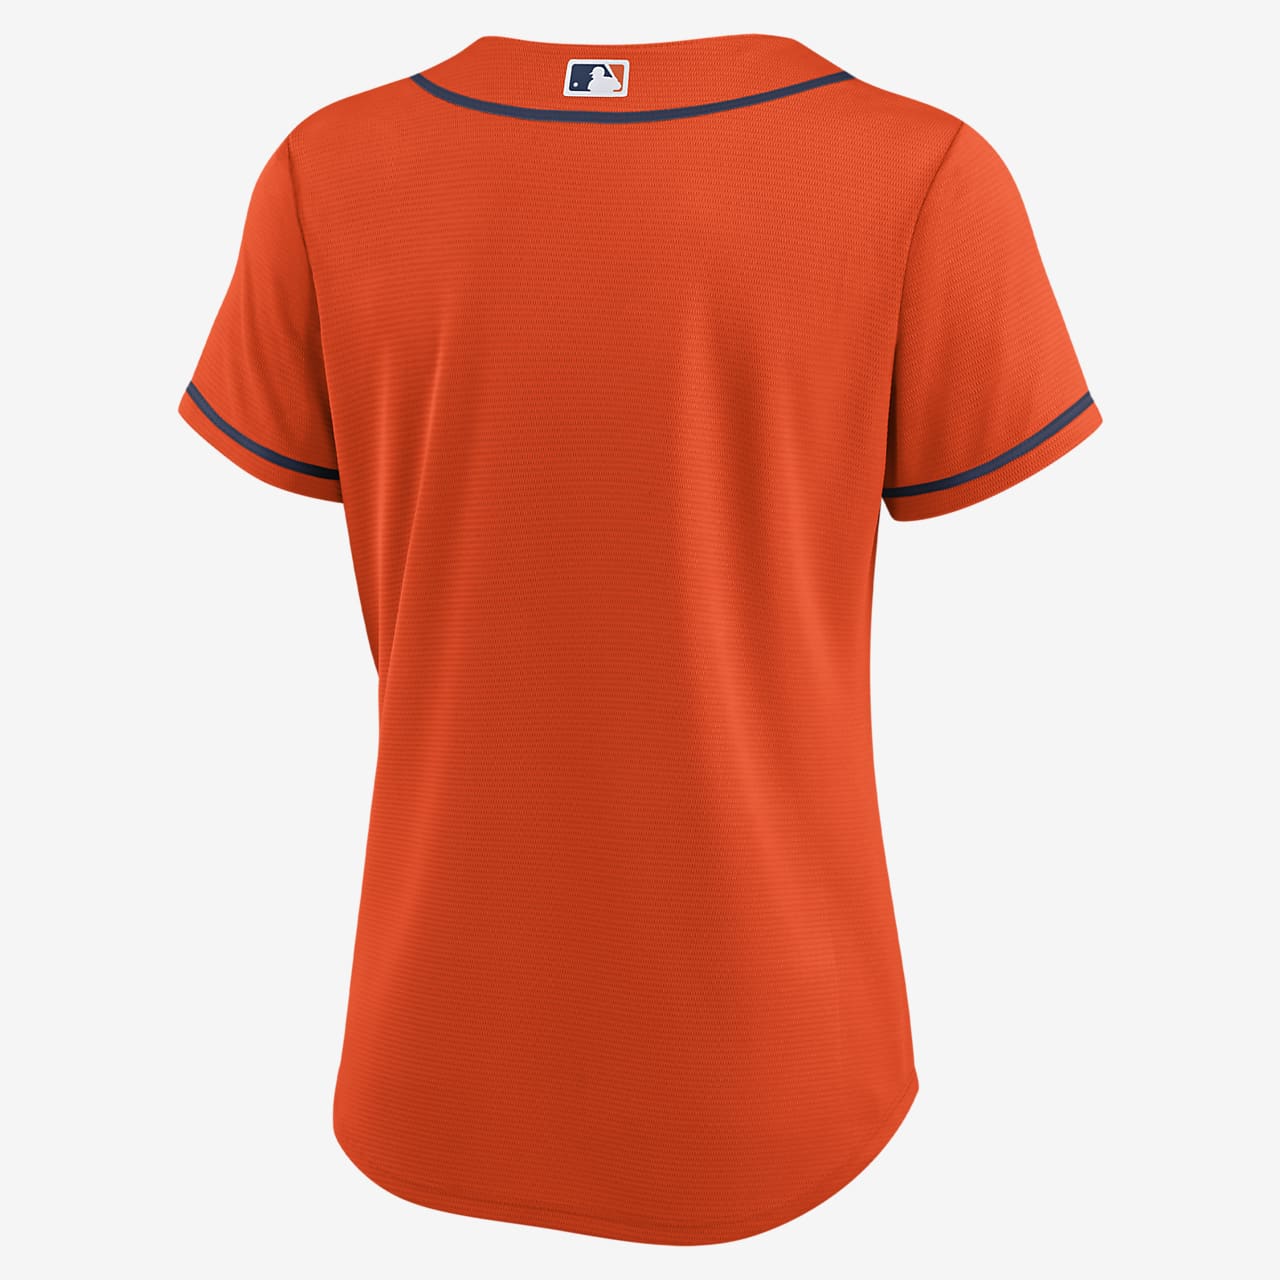 orange women's astros jersey